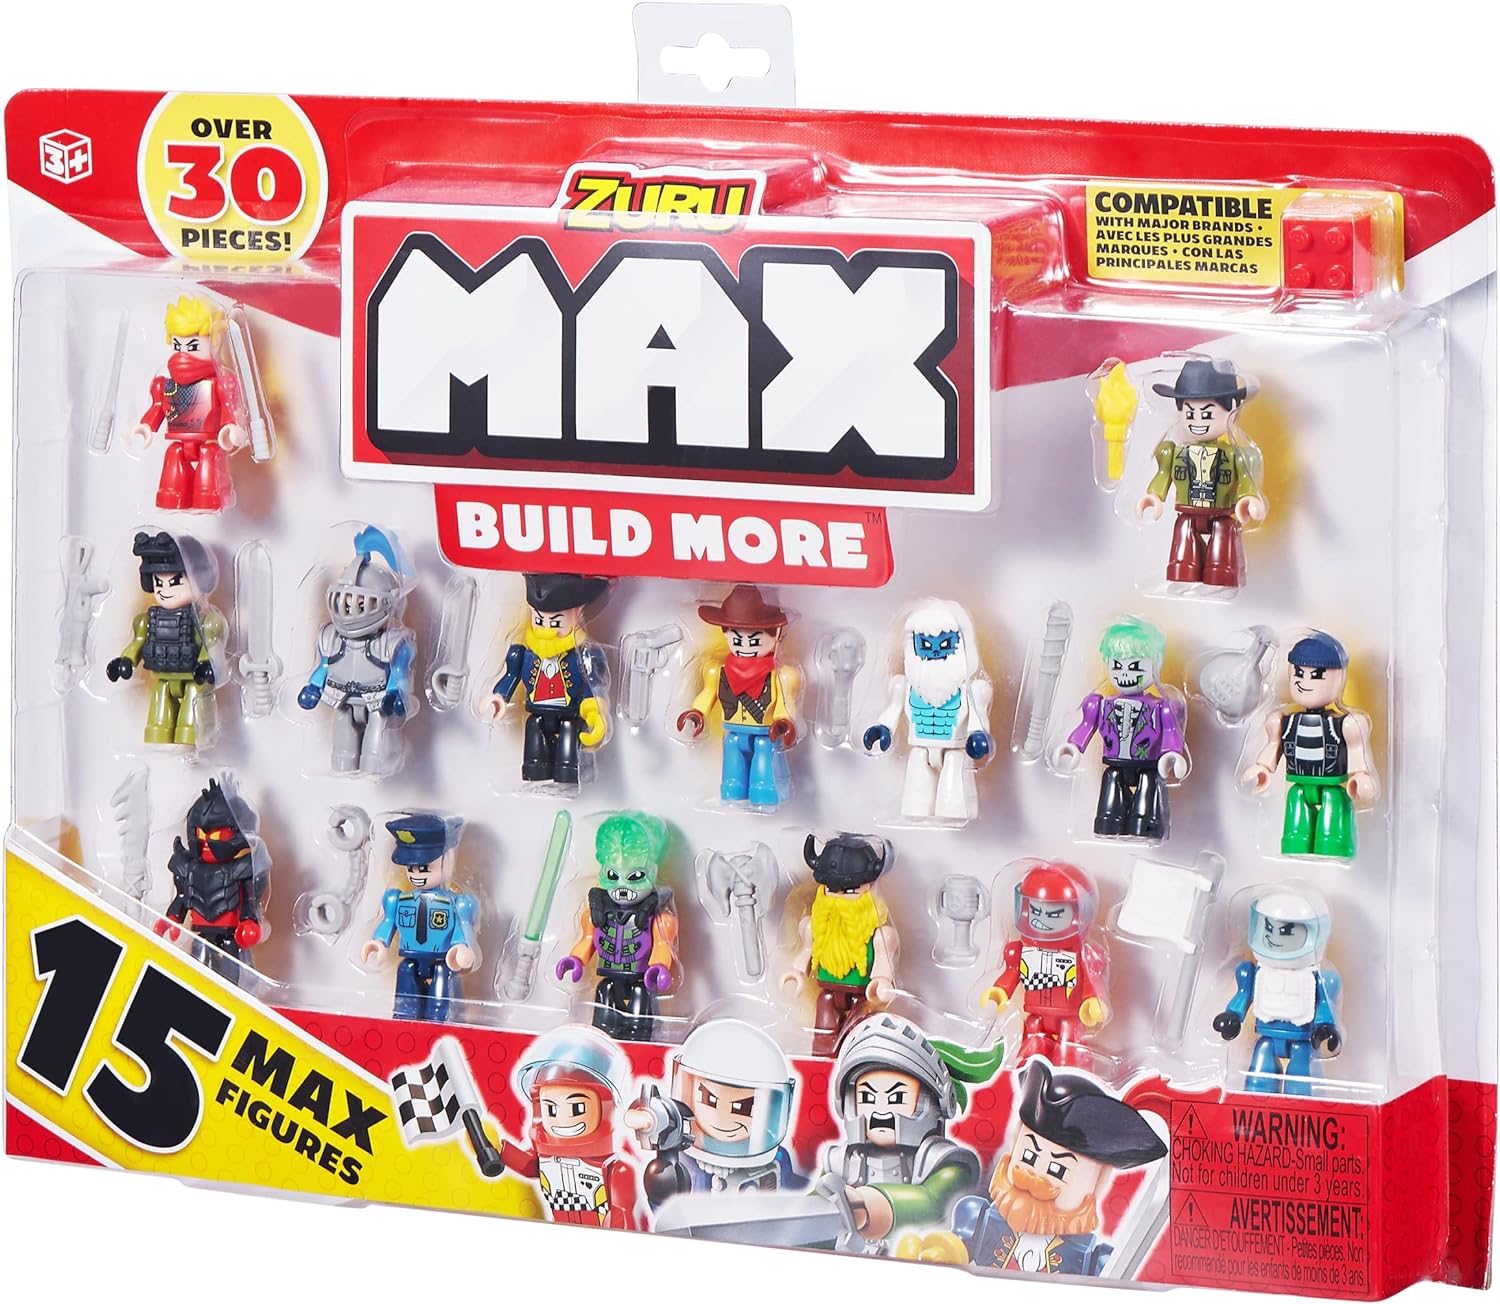 Max Build More 15 Figures Pack – Random Figures